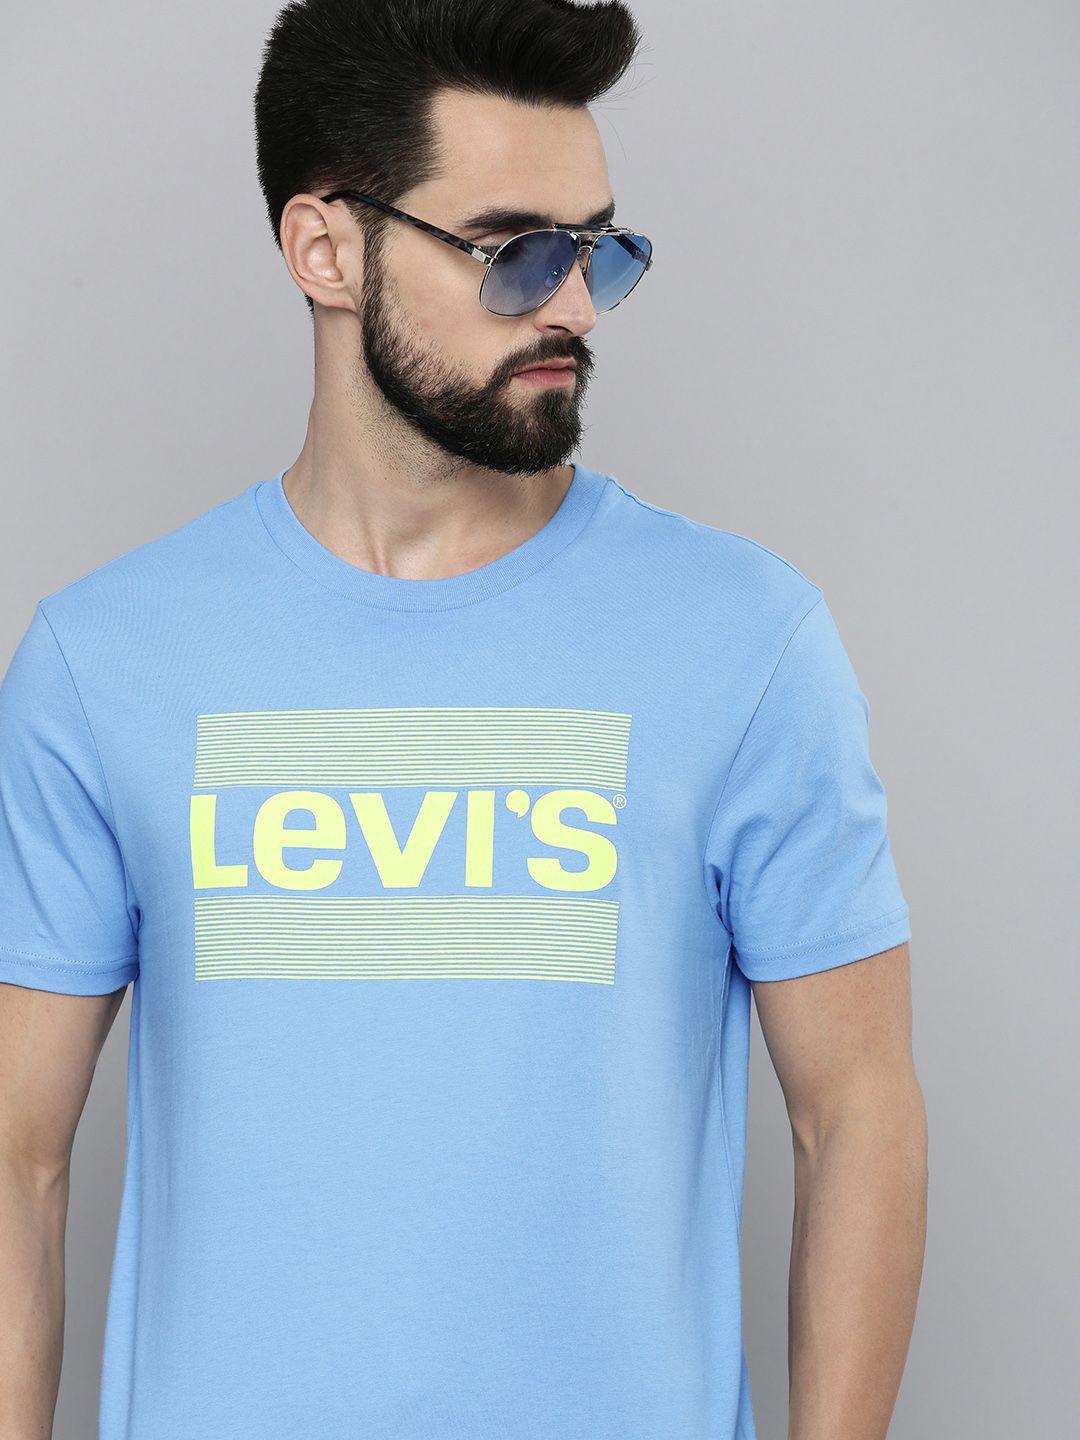 levis-men-blue-&-white-brand-logo-printed-pure-cotton-casual-t-shirt